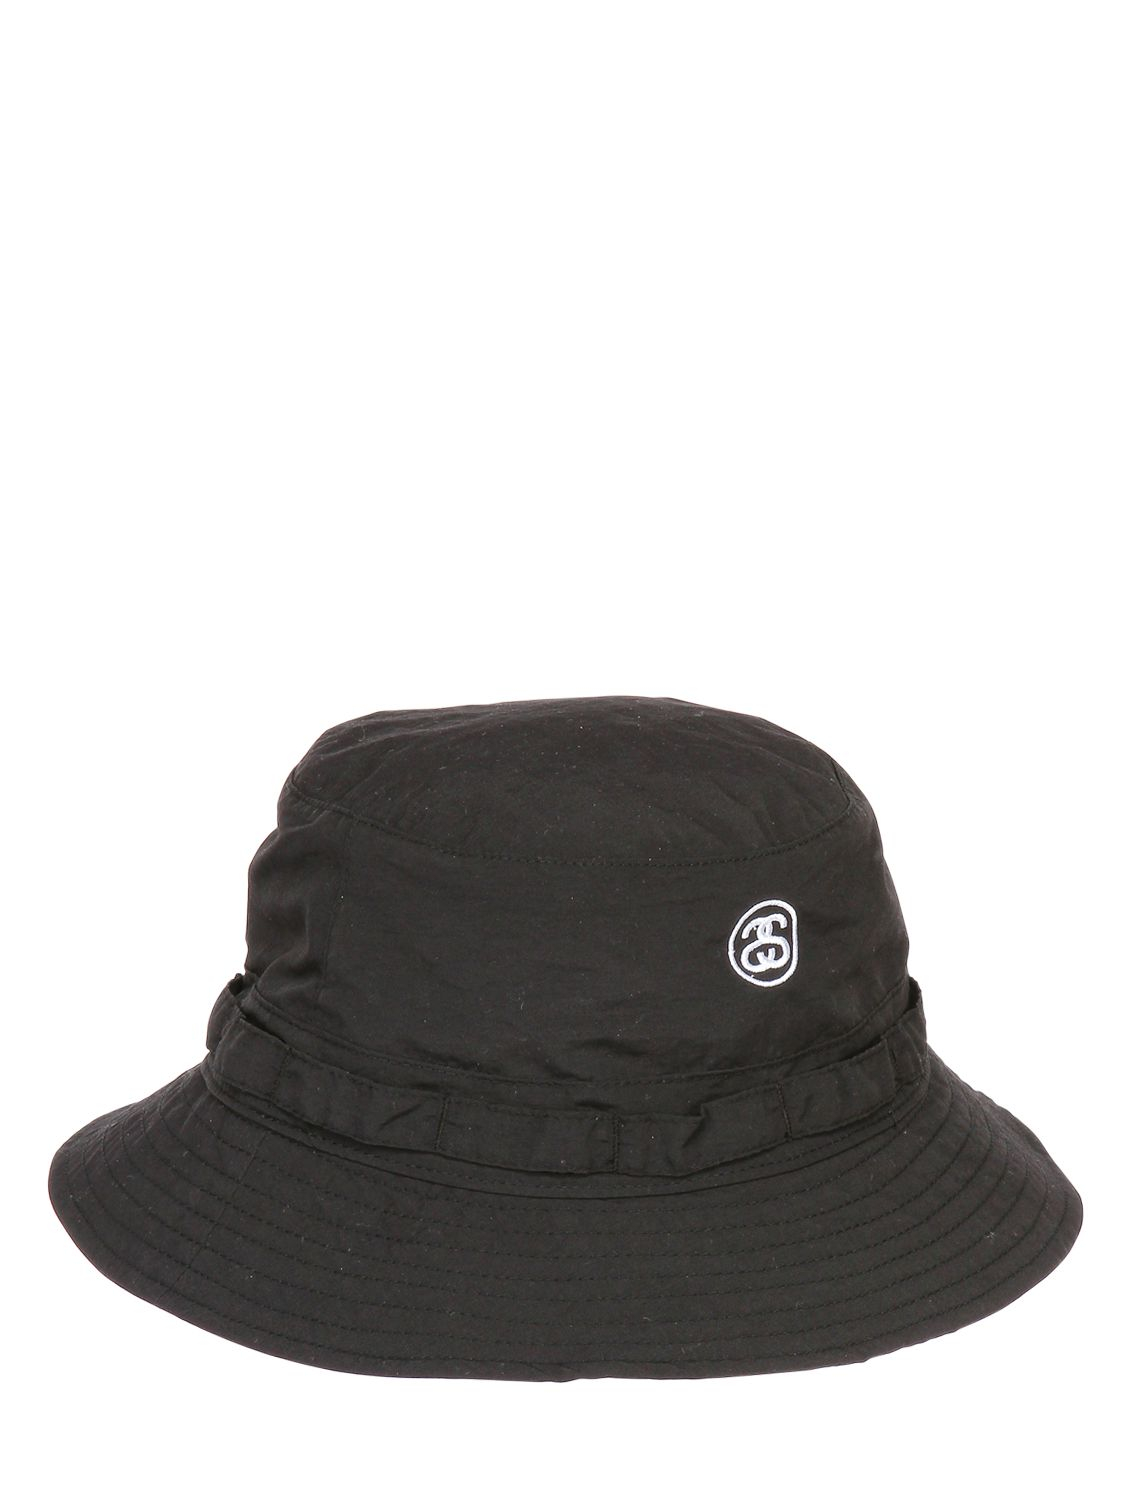 Stussy Packable Bucket Hat in Black | Lyst